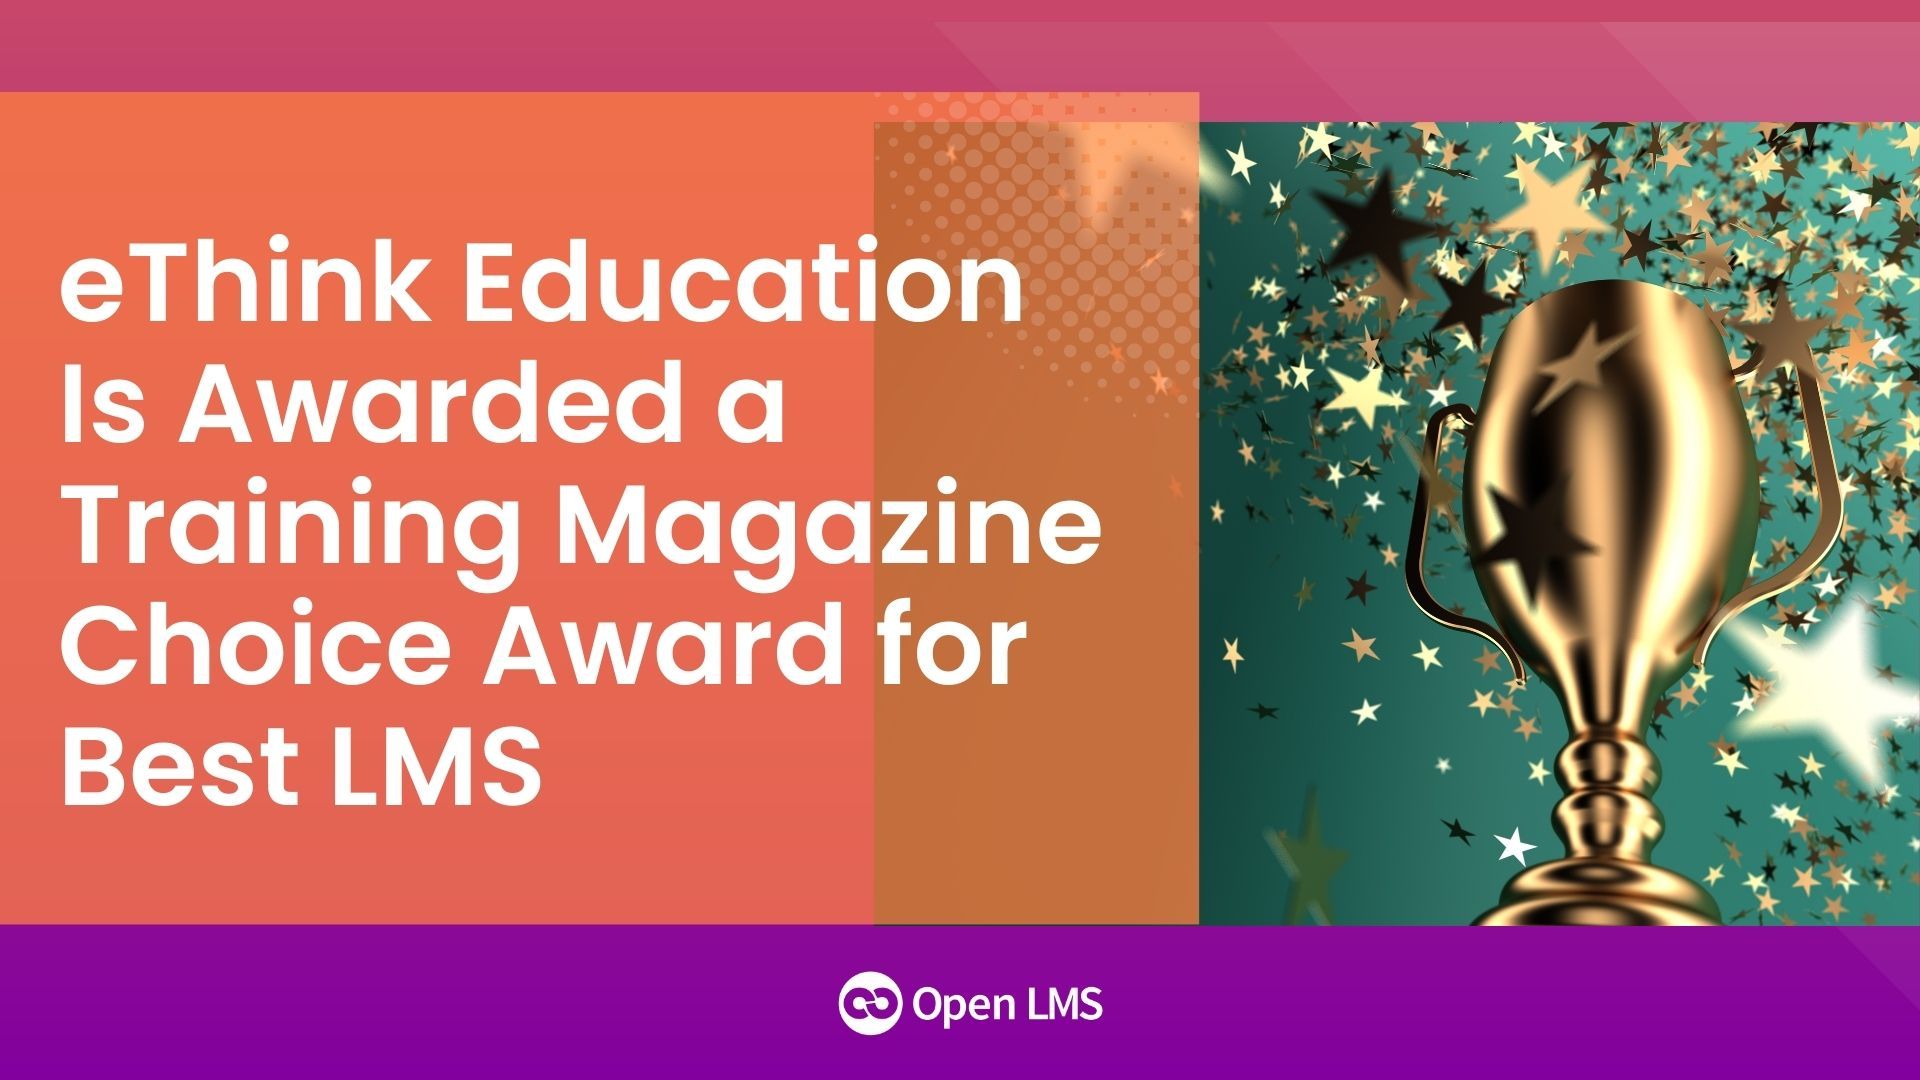 eThink Education Is Awarded a Training Magazine Choice Award for Best LMS